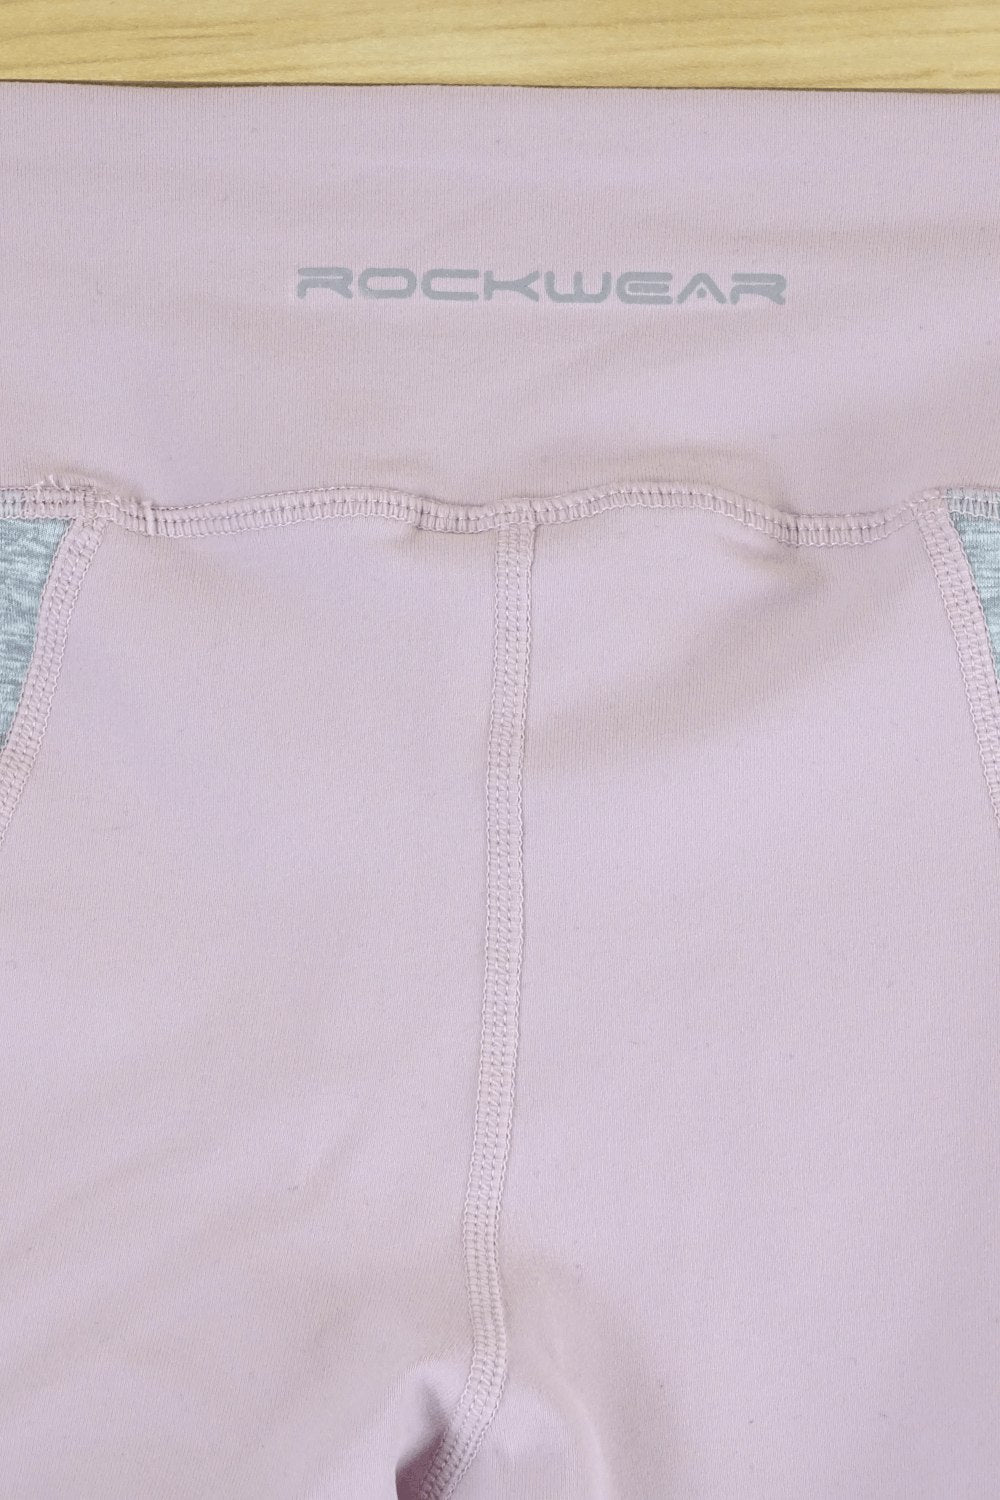 Rockwear Pink Leggings 8